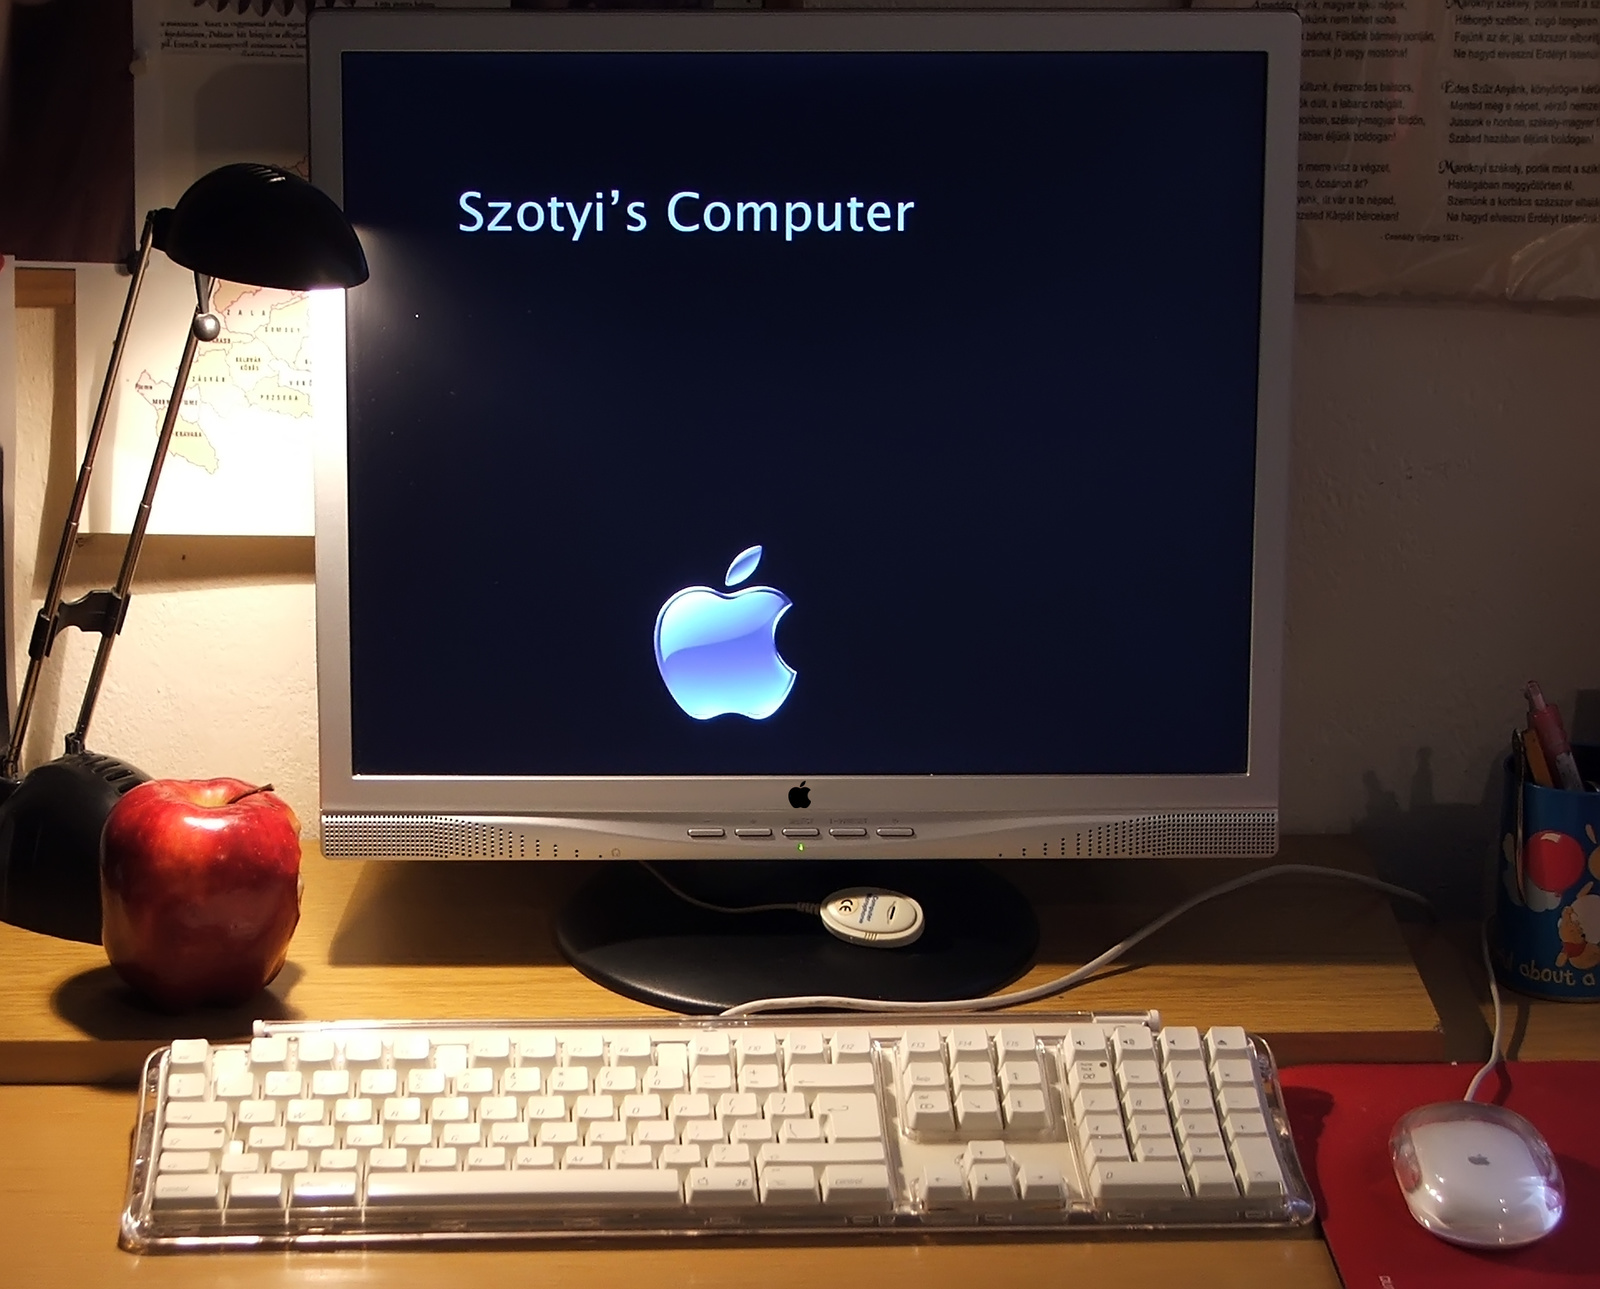 Szotyi's computer